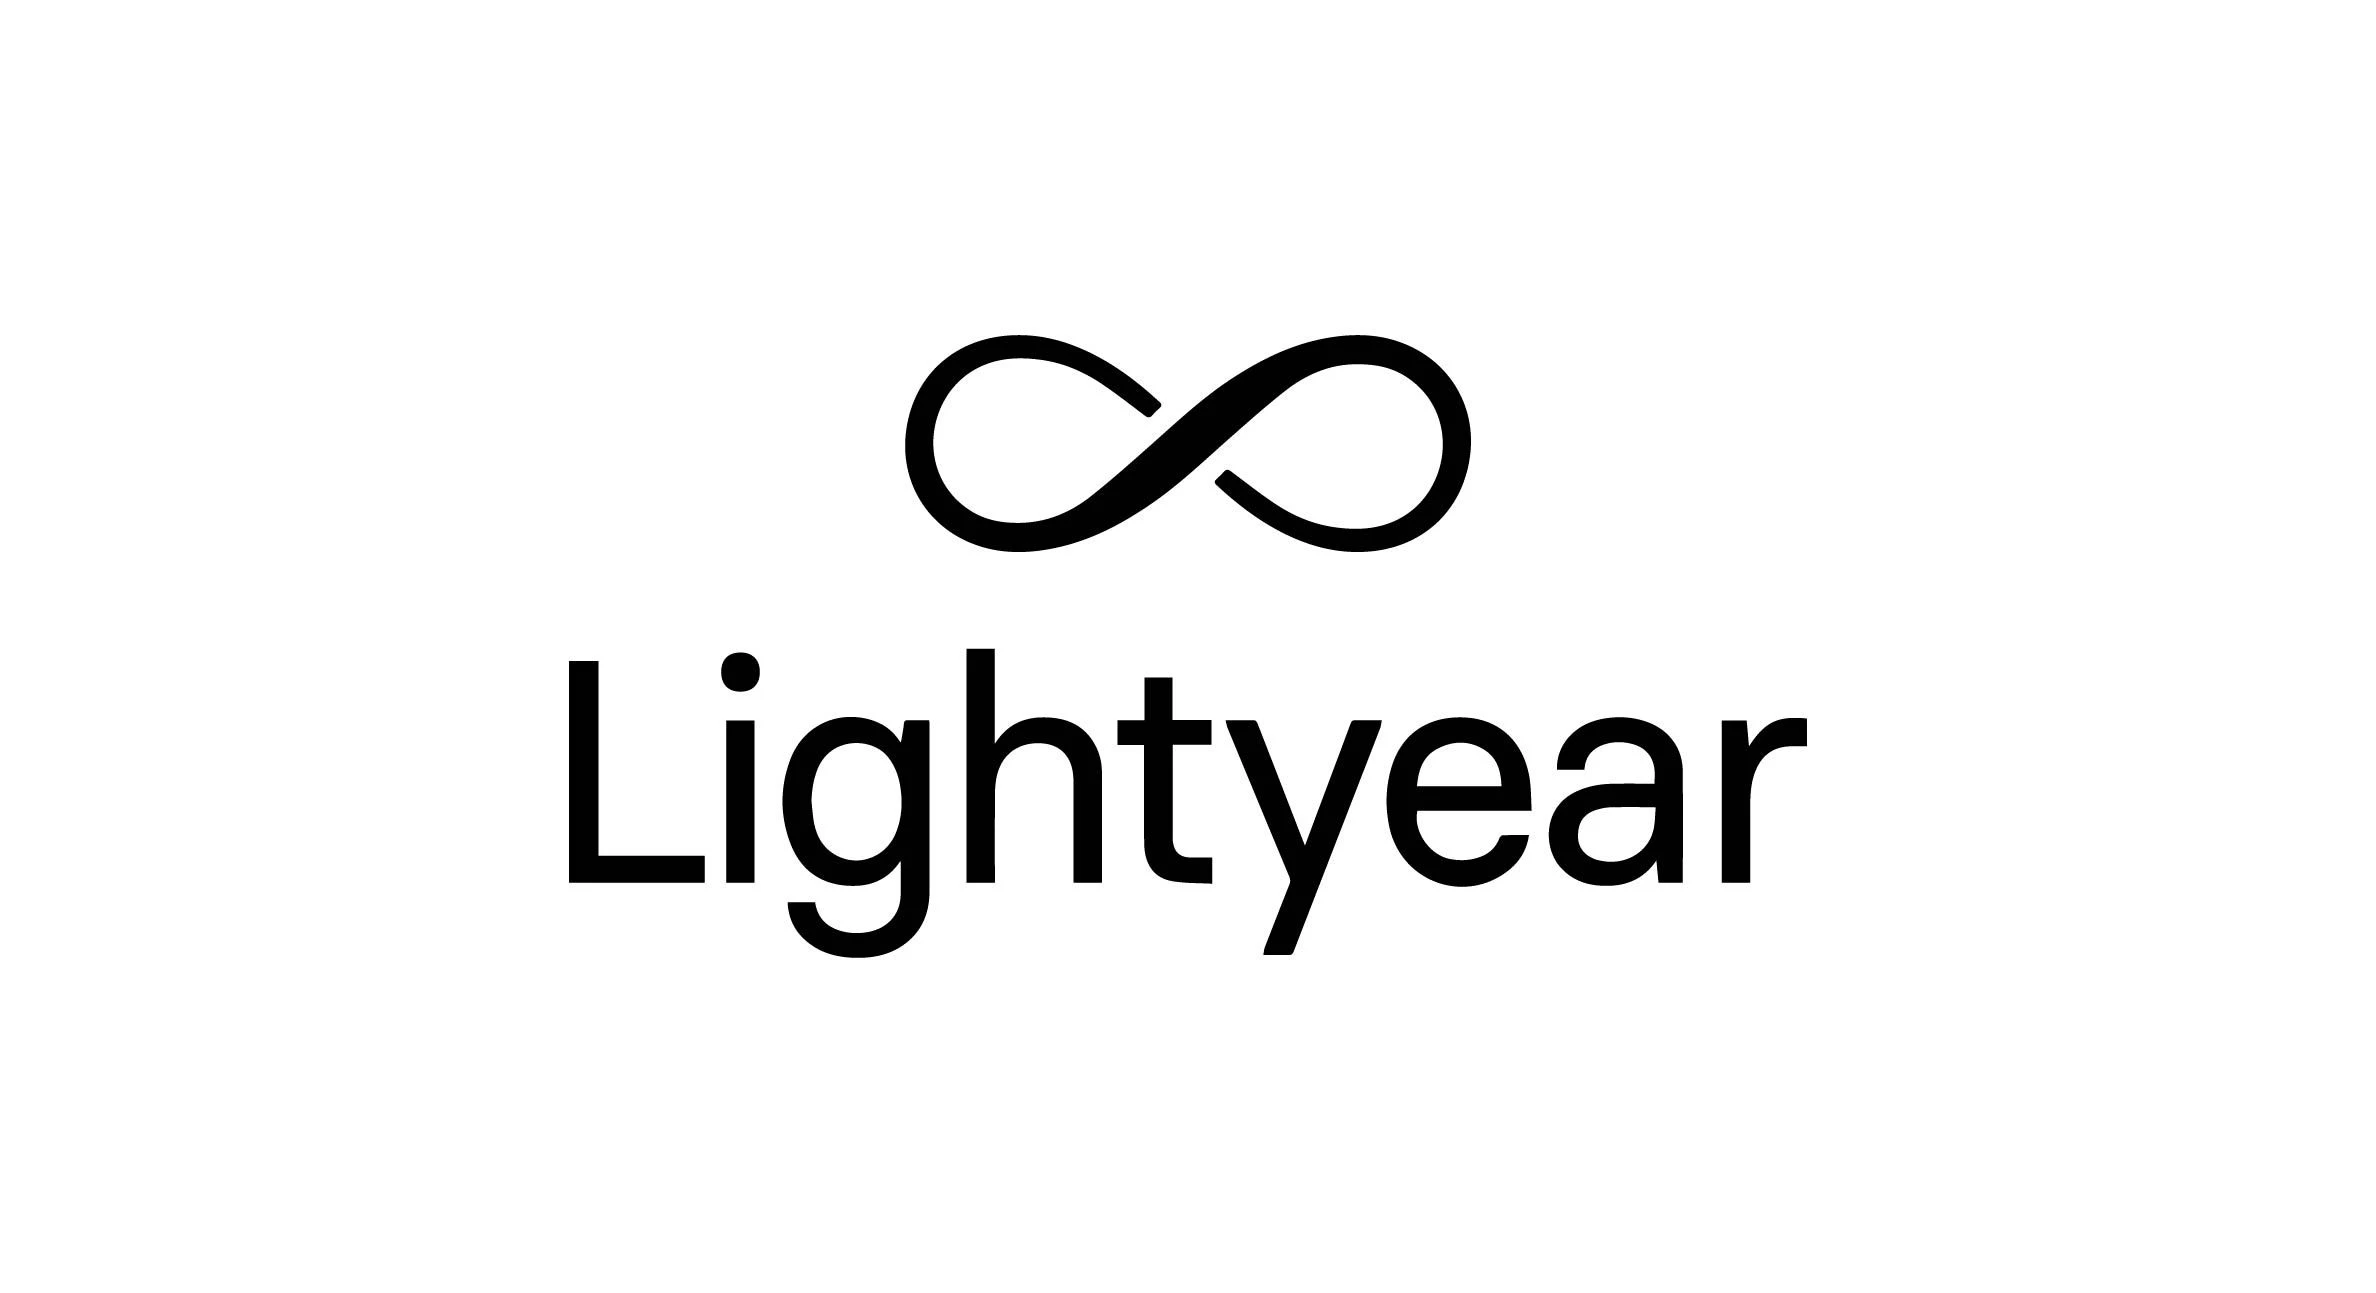 Lightyear car brand logo